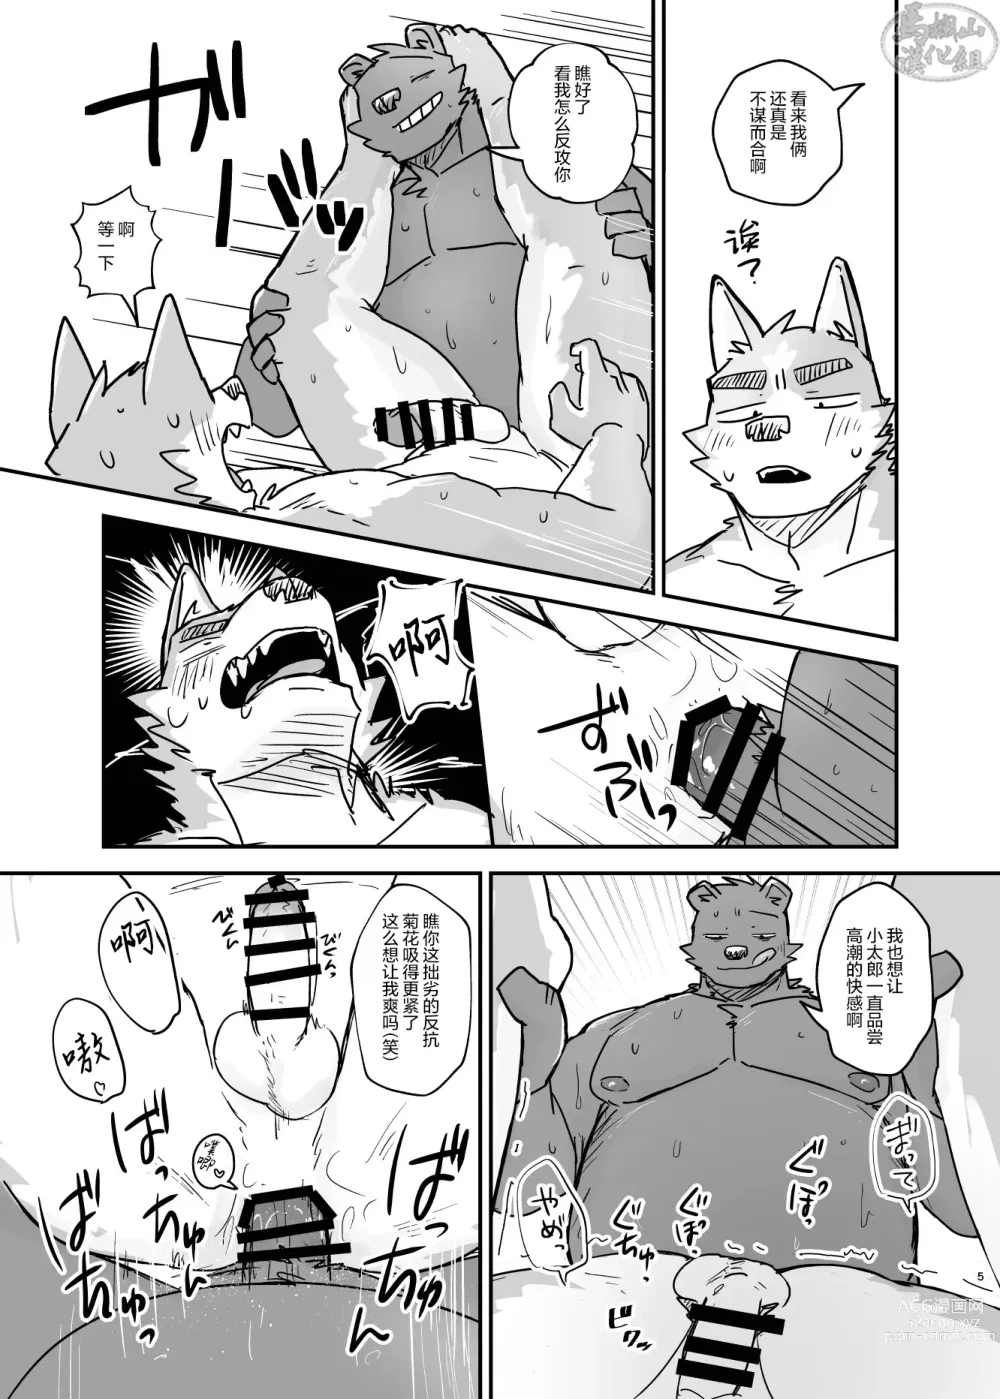 Page 5 of doujinshi 梦乡时分的情事